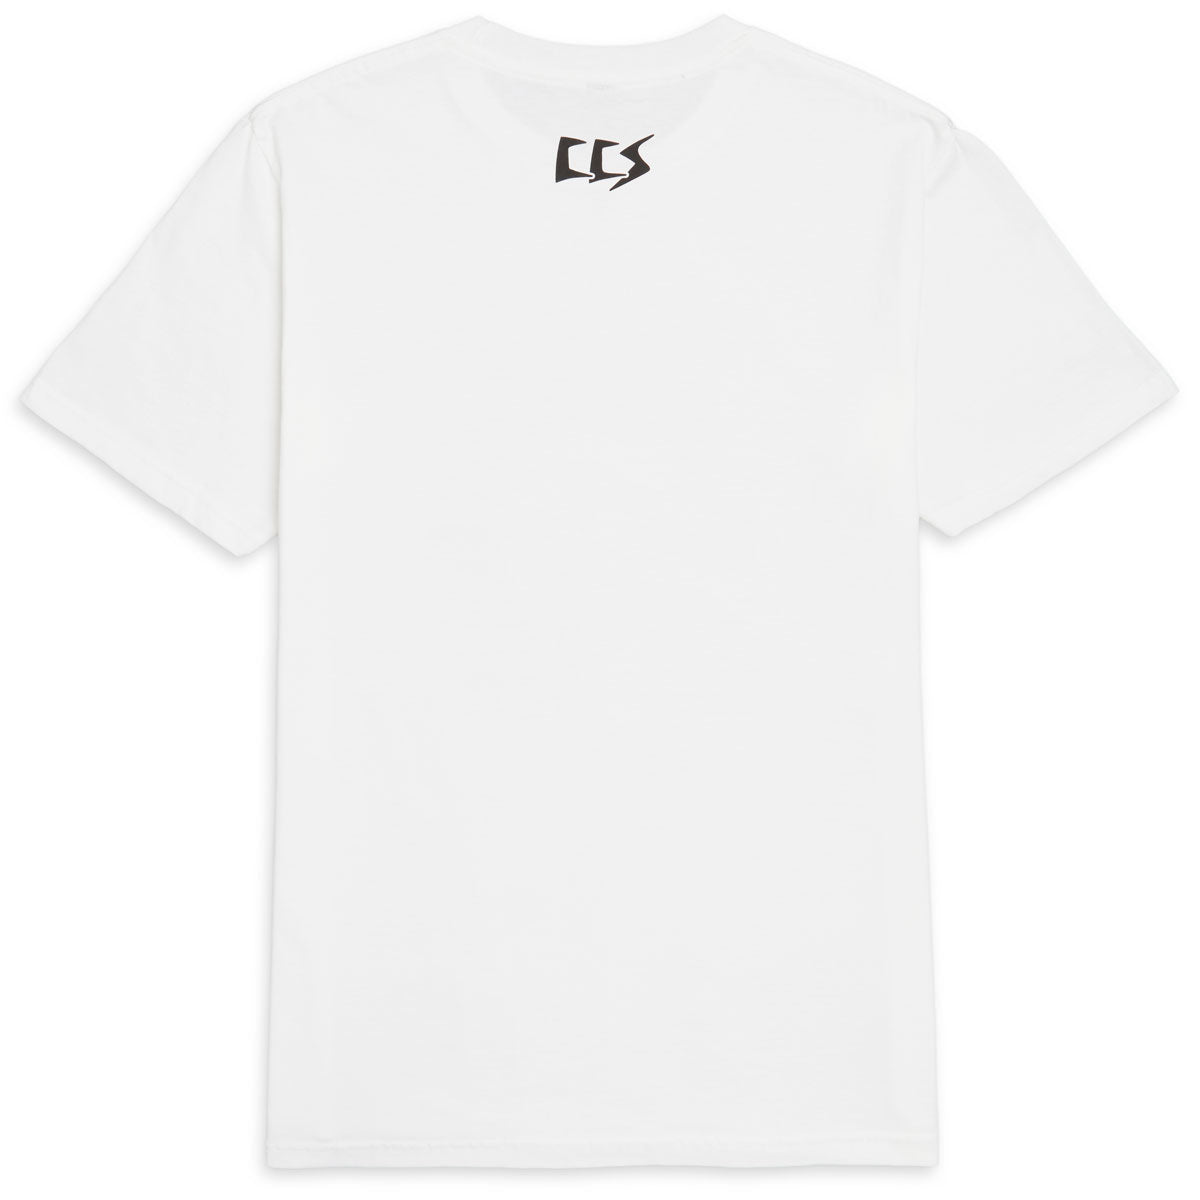 CCS OG Punk T-Shirt - White/Blue image 2